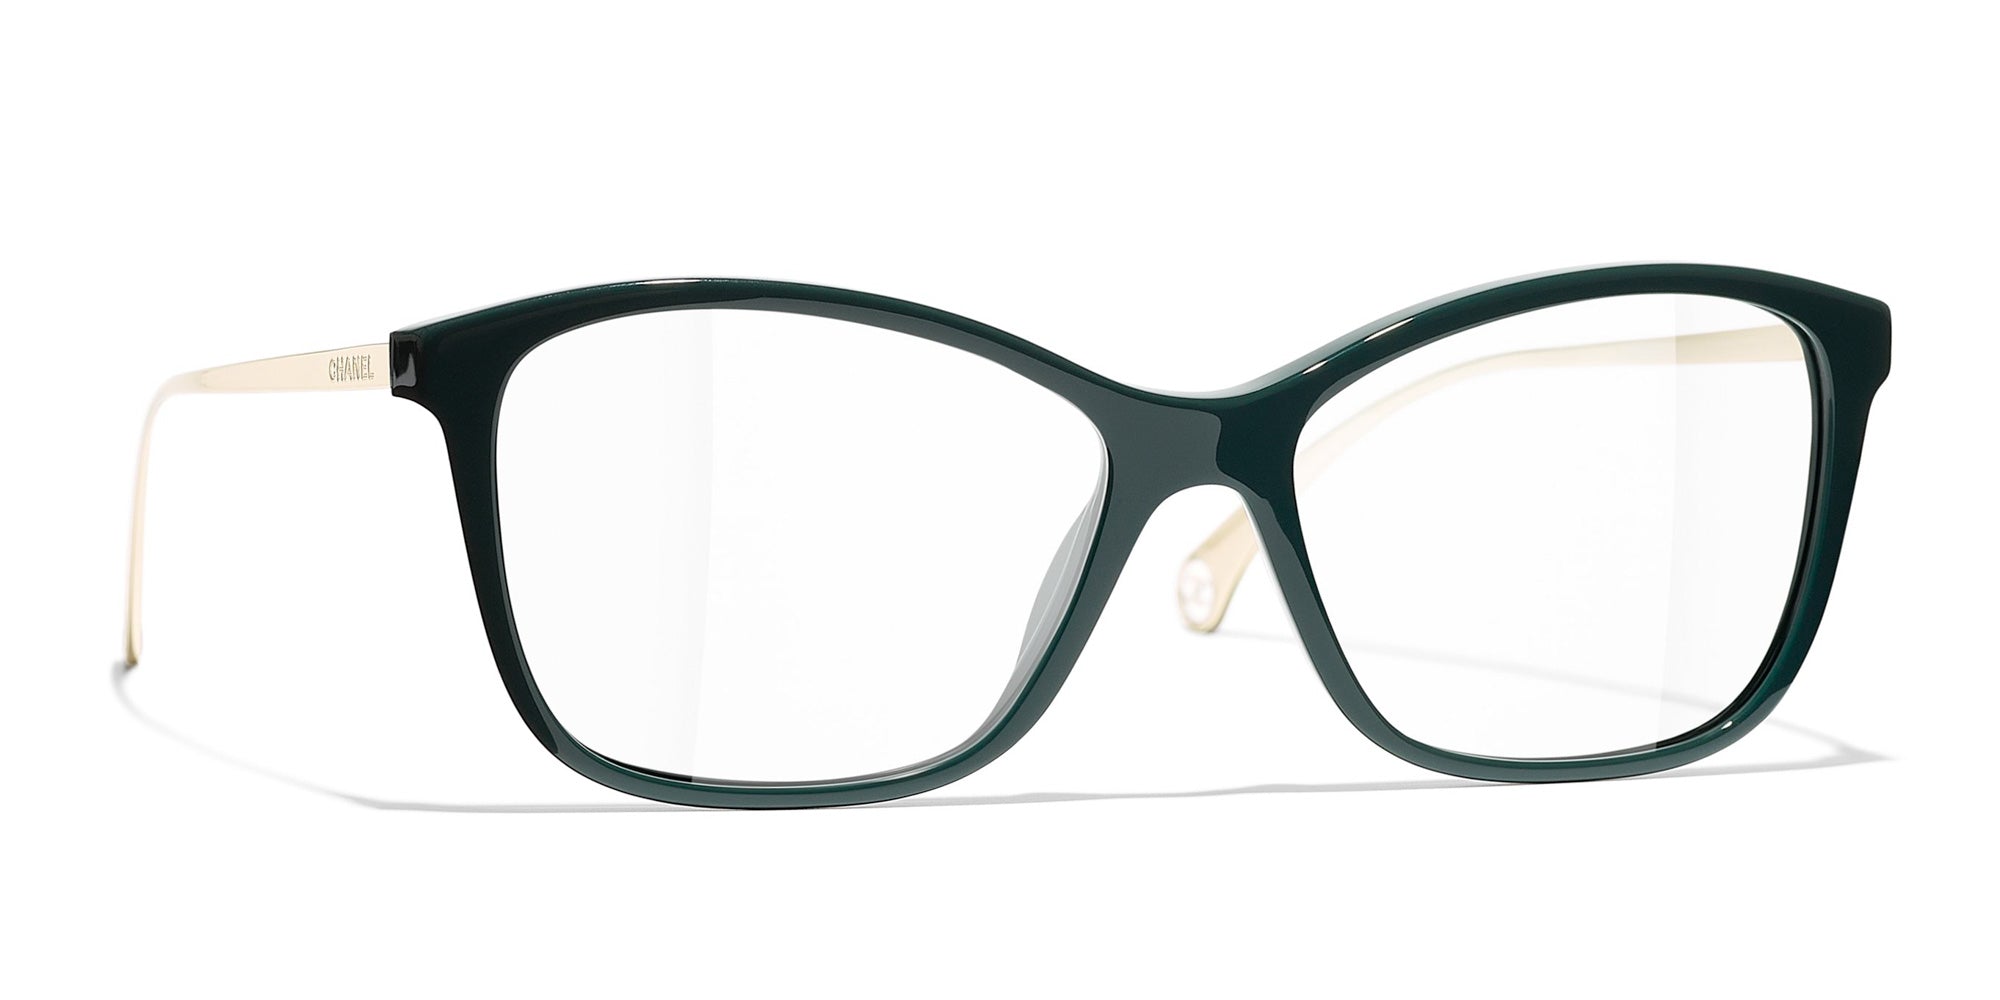 CHANEL 3442 622 51mm Eyewear FRAMES Eyeglasses RX Optical Glasses  New  Italy  GGV Eyewear